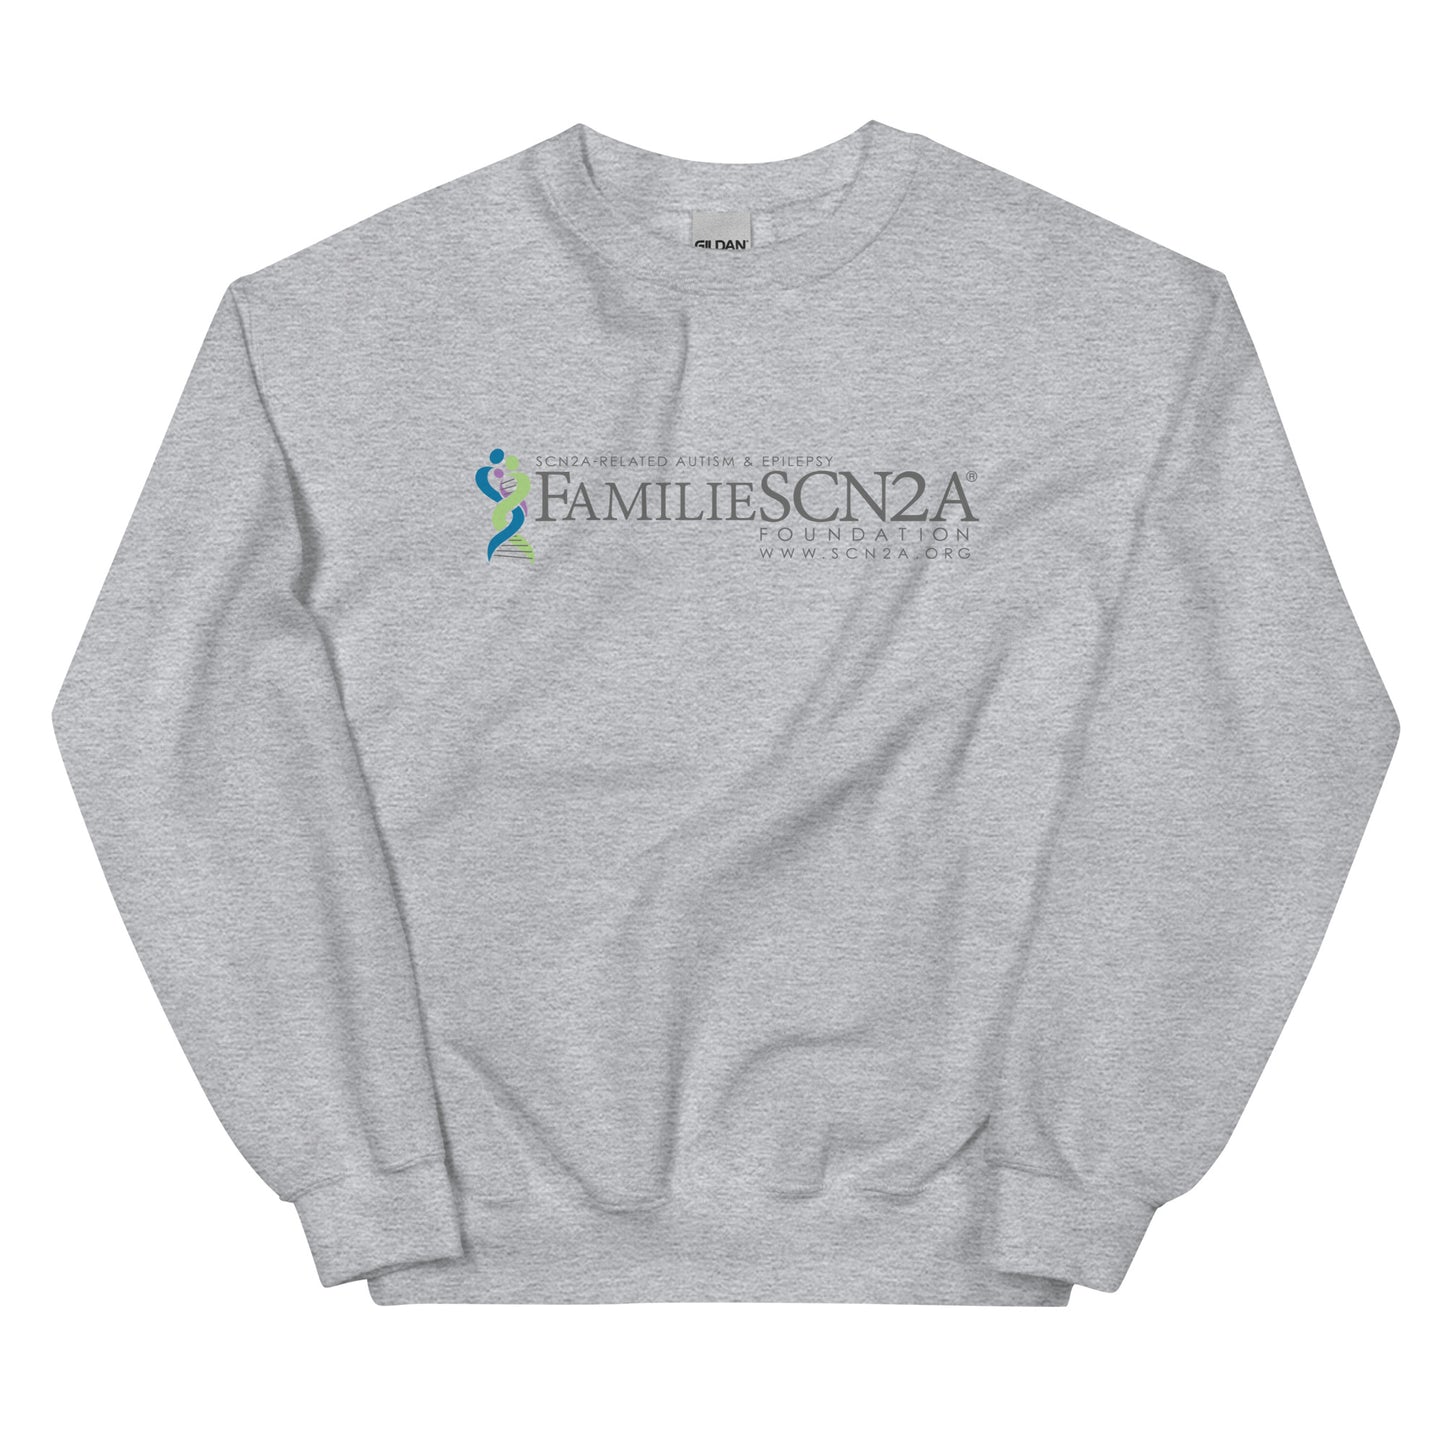 Unisex Sweatshirt "FamilieSCN2A"